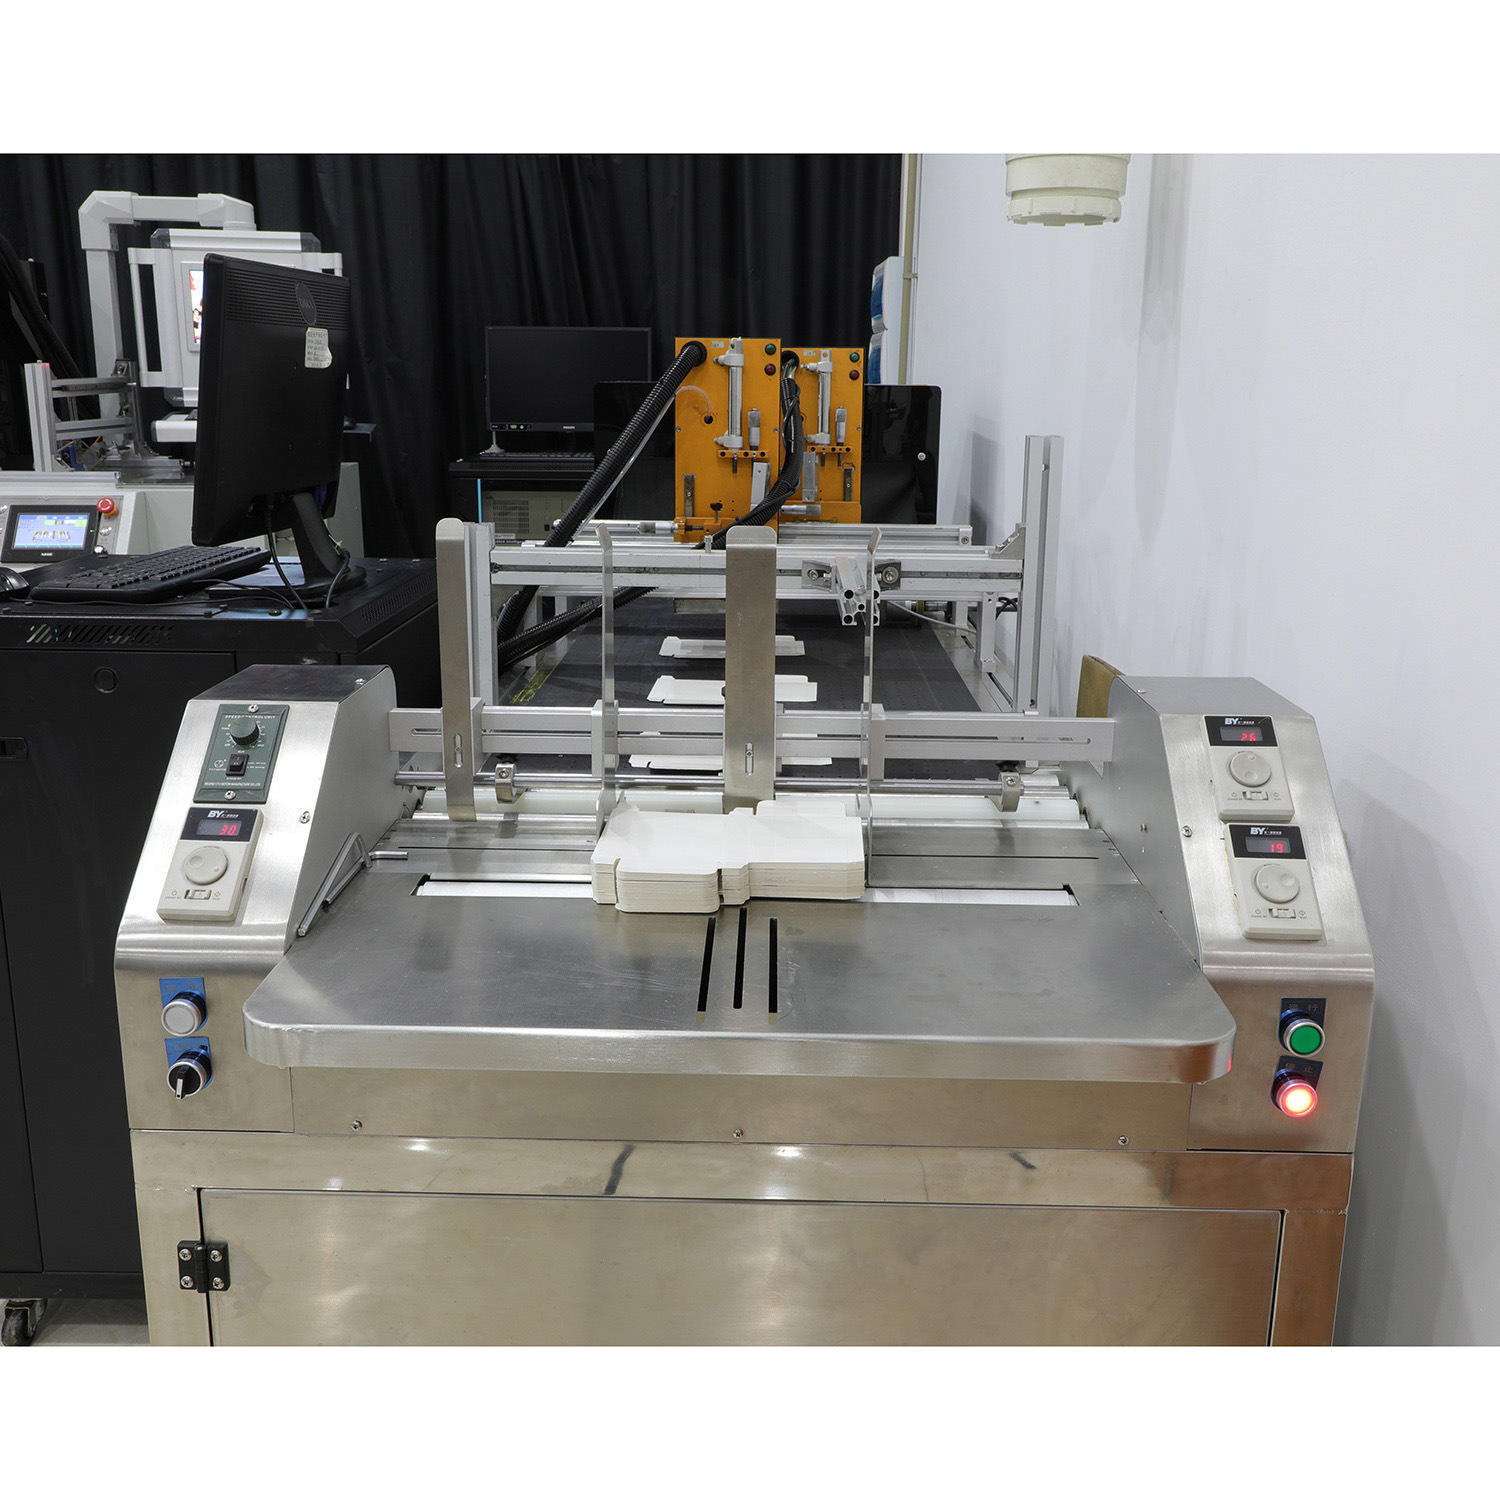 Sheet-Fed Industrial Large Format UV Digital Qr Code Printing Machine Inkjet Printer for Carton Box Package